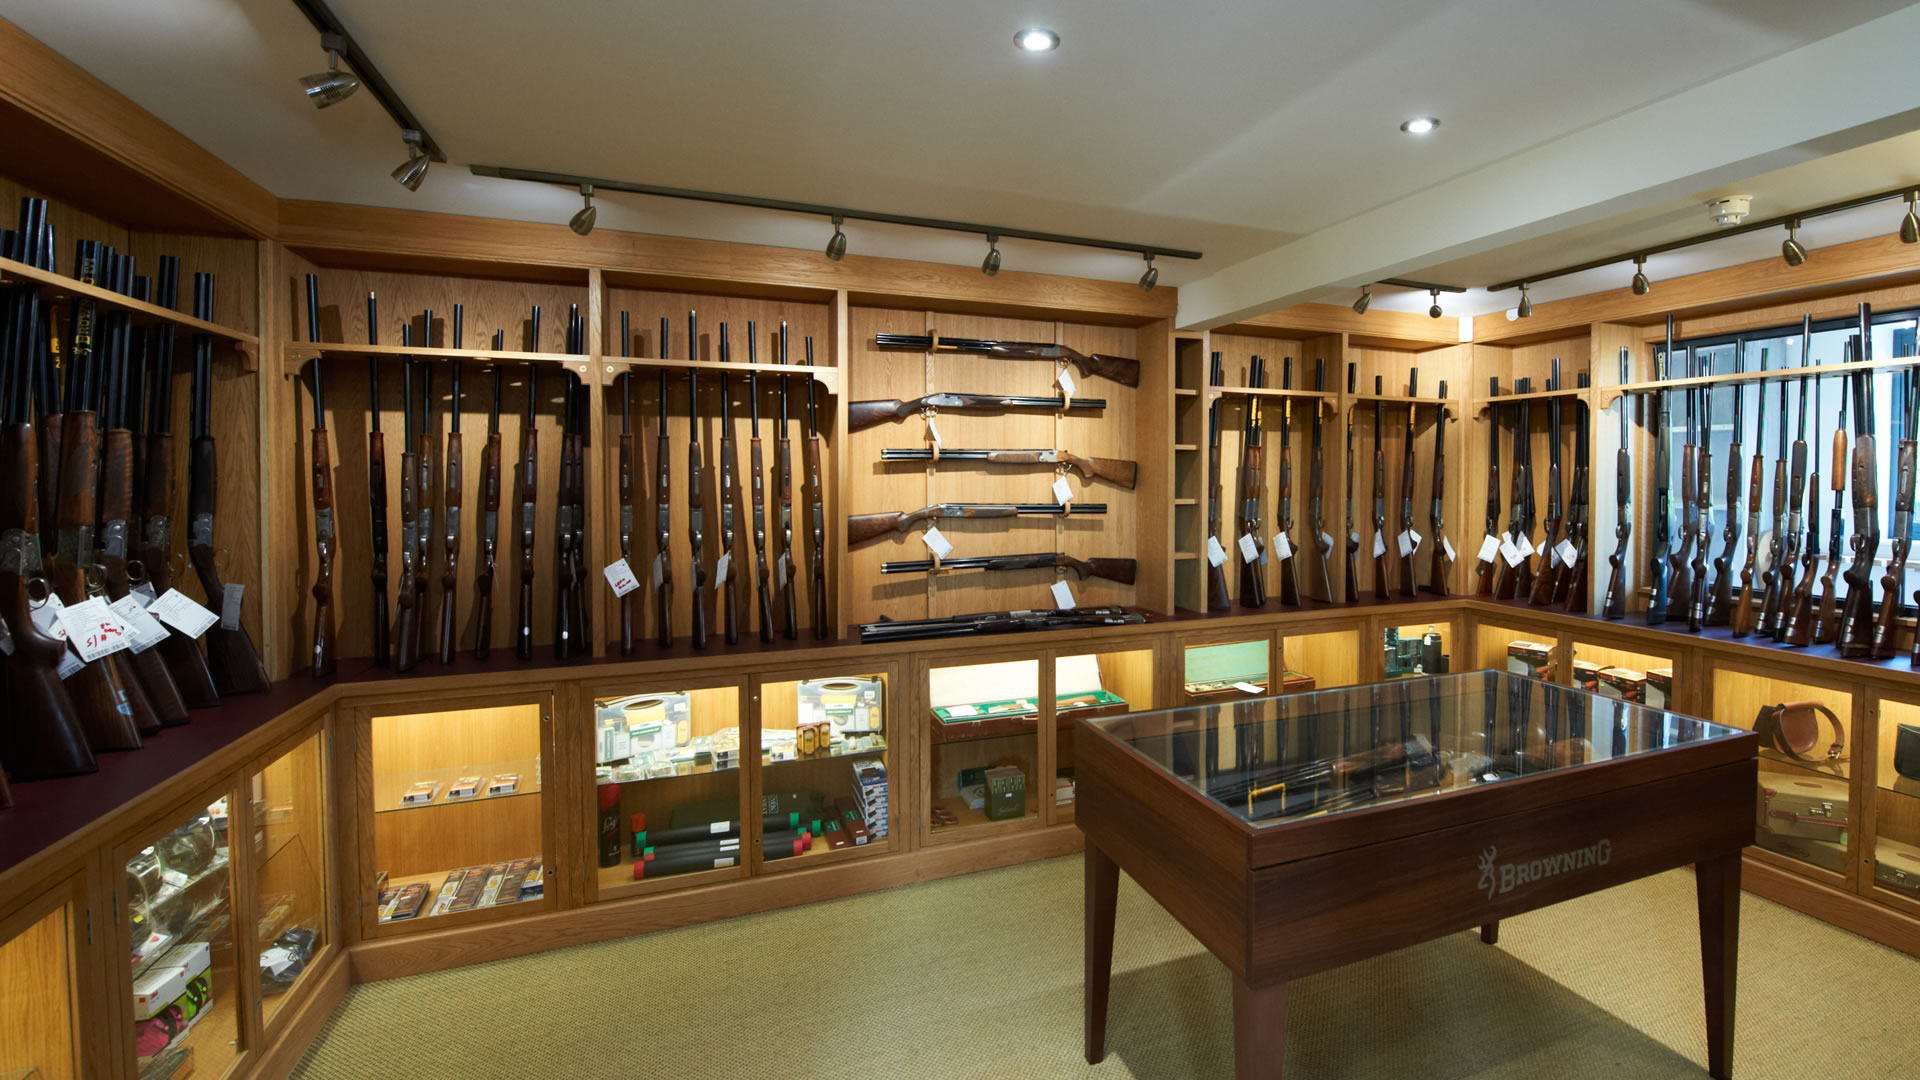 A professonally made gun room.